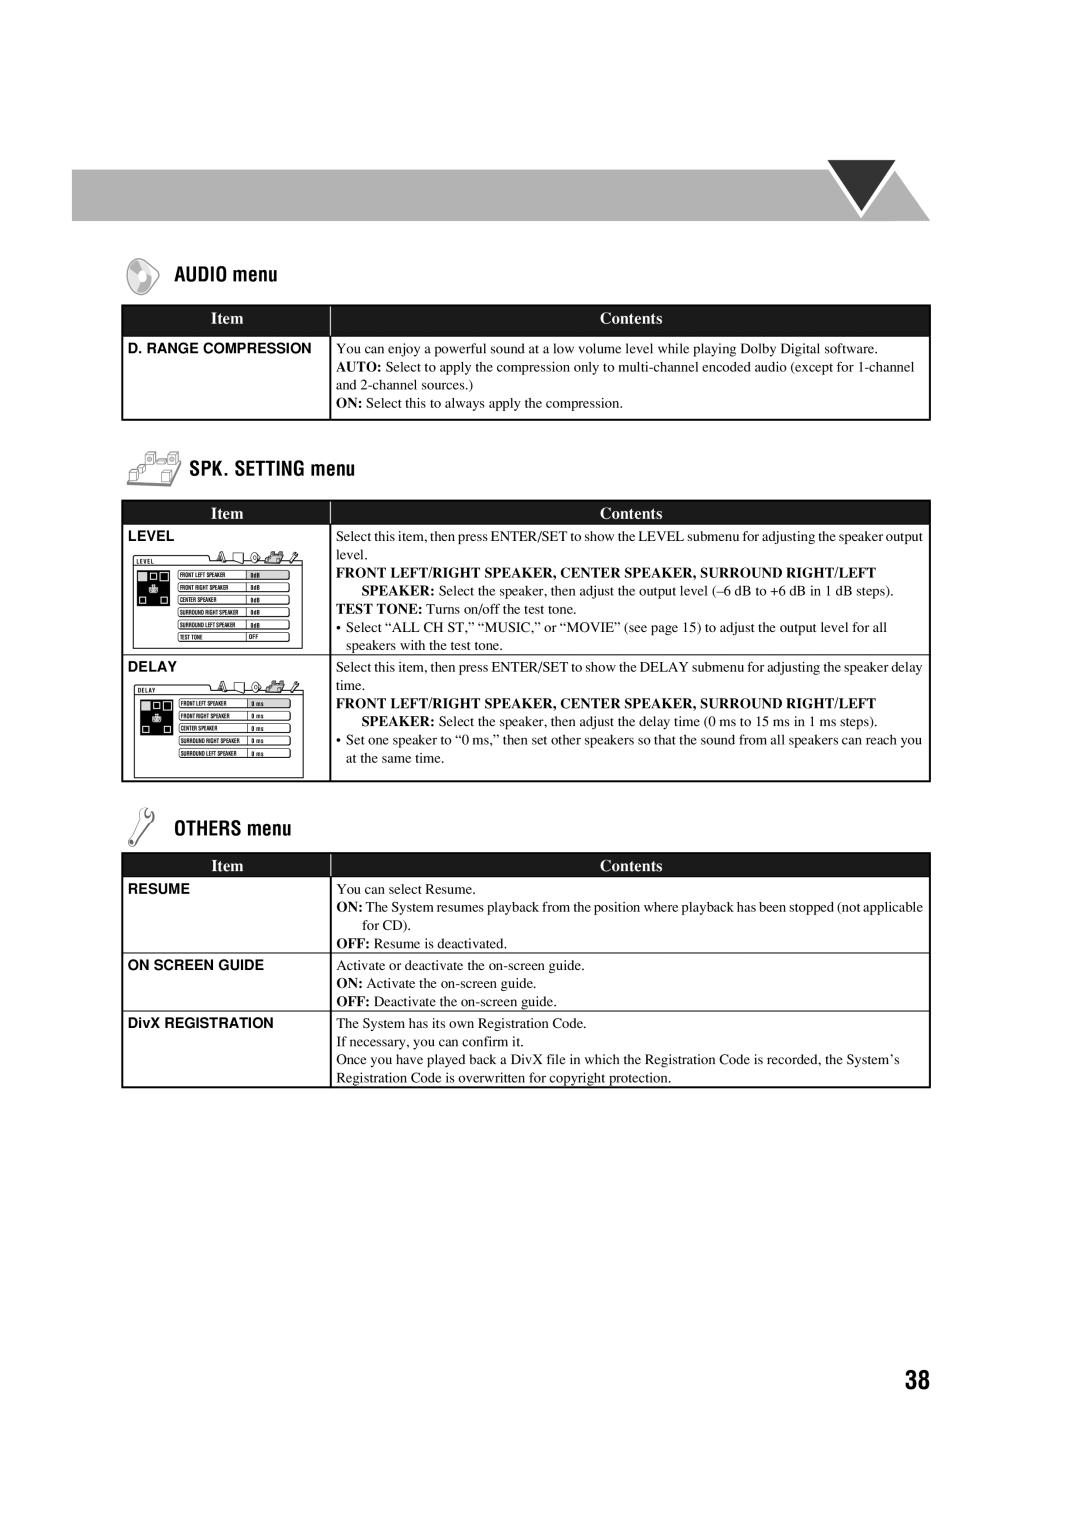 JVC CA-DXJ35 AUDIO menu, SPK. SETTING menu, OTHERS menu, Item, Contents, D. Range Compression, Level, level, Delay, time 